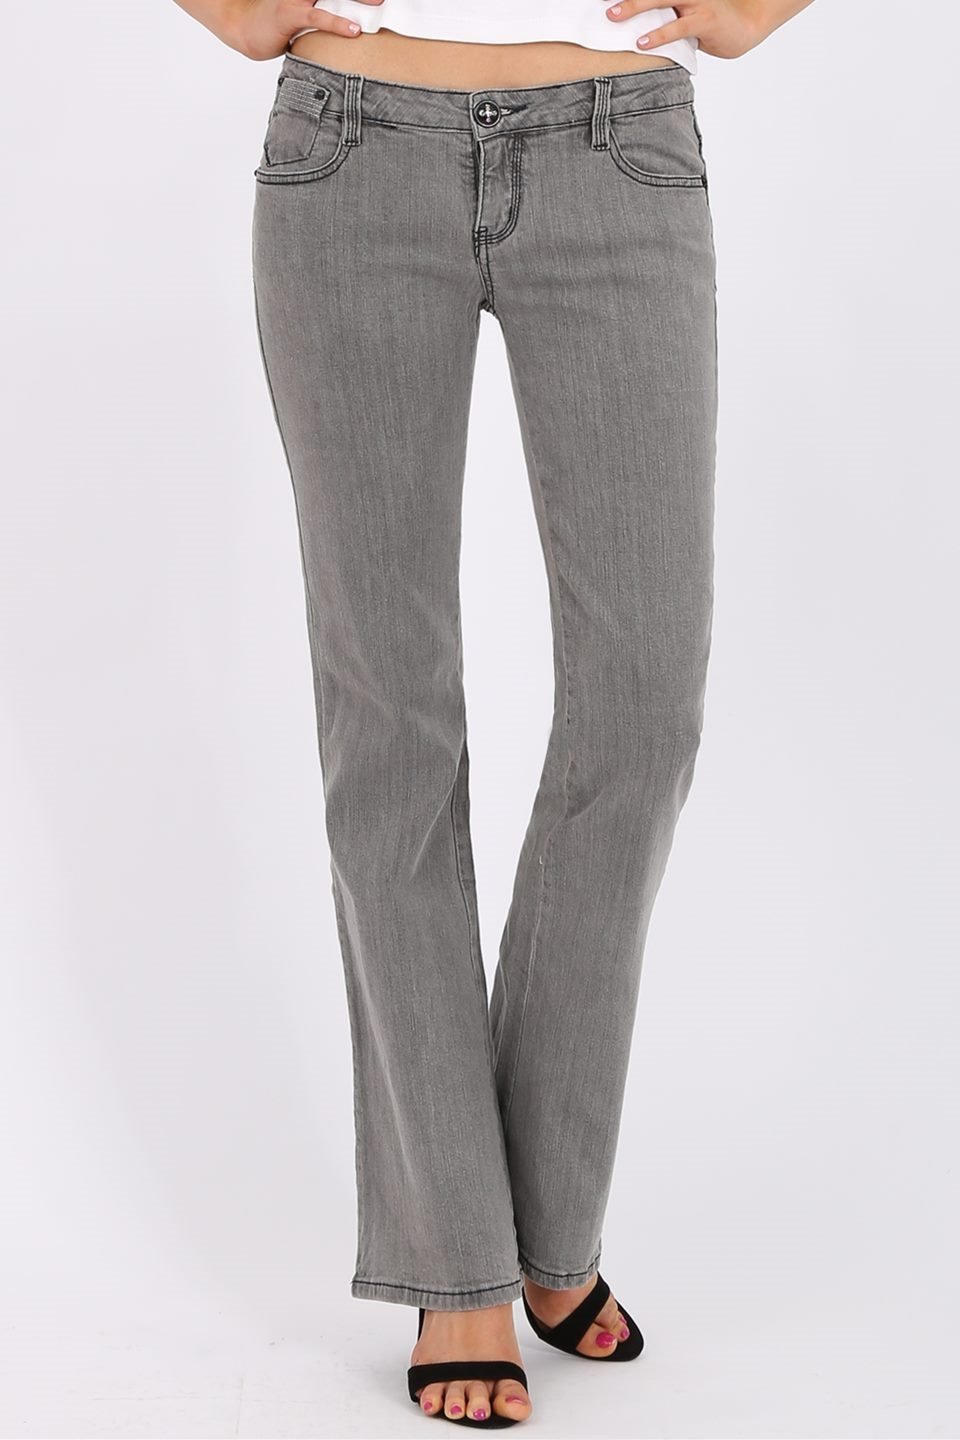 MISS PINKI Payton bootlegs Jeans in grey